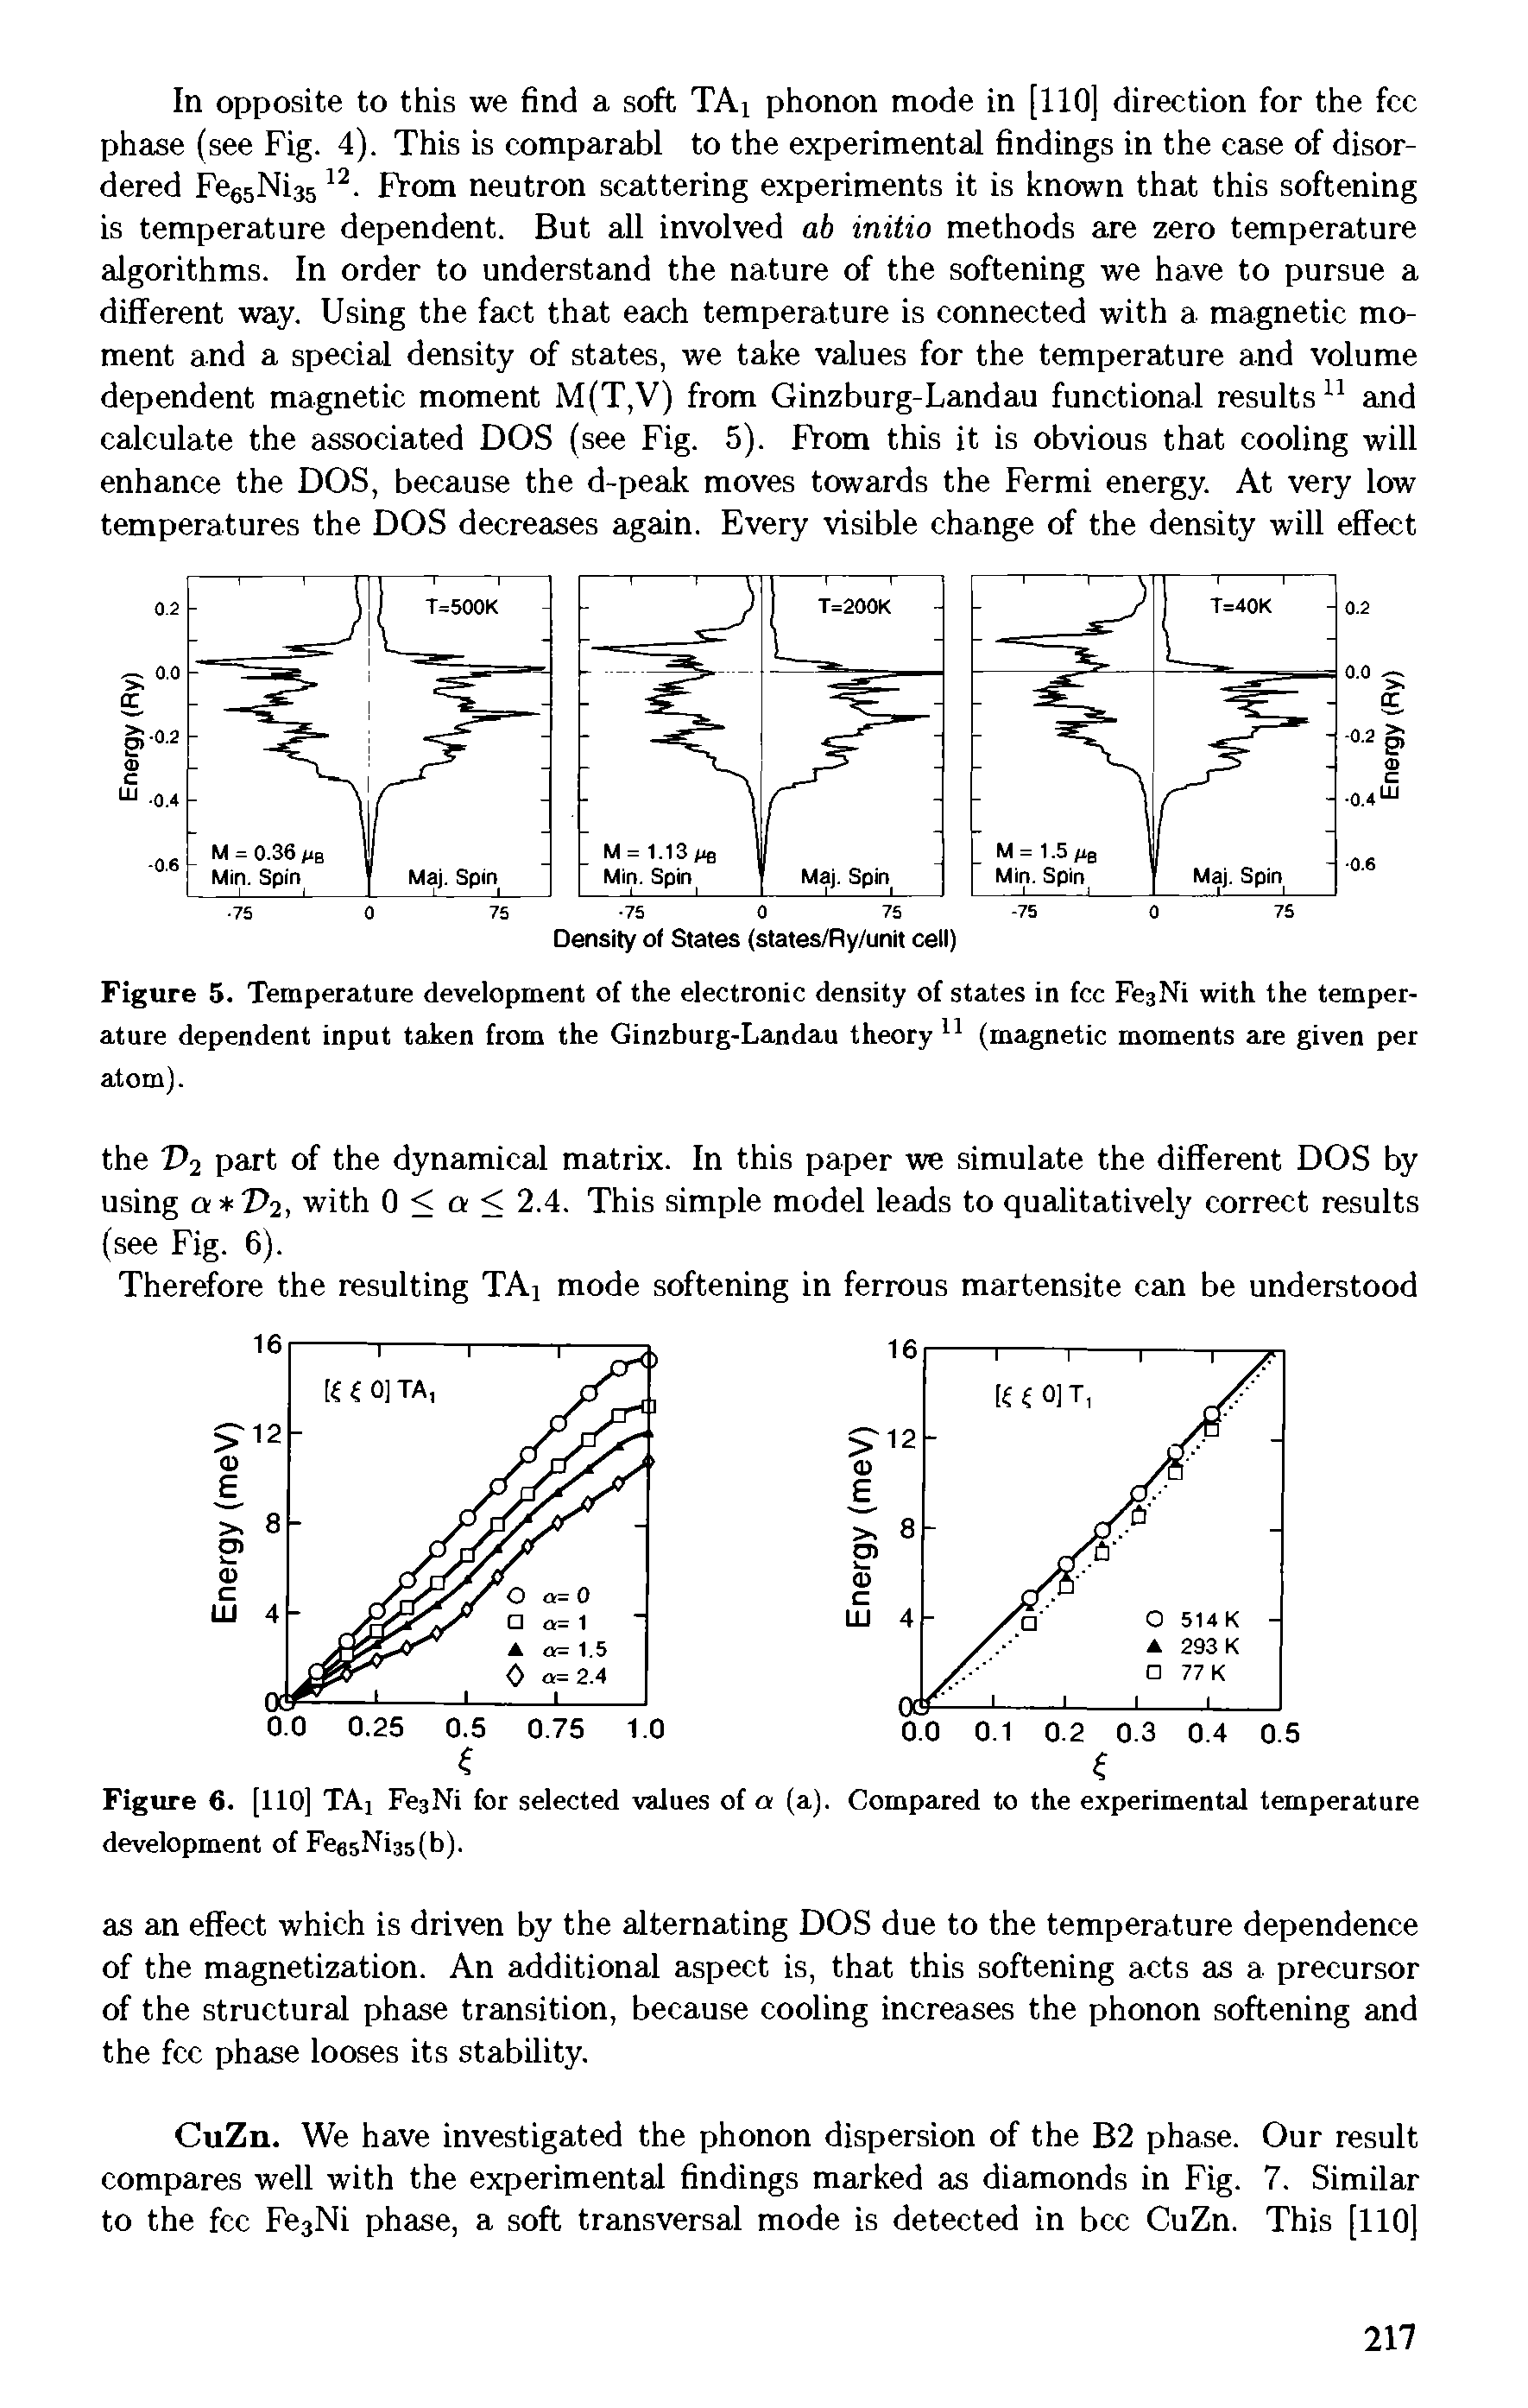 Figure 6. [110] TAj FeaNi for selected values of a (a). Compared to the experimental temperature development of FeasNiaslb).